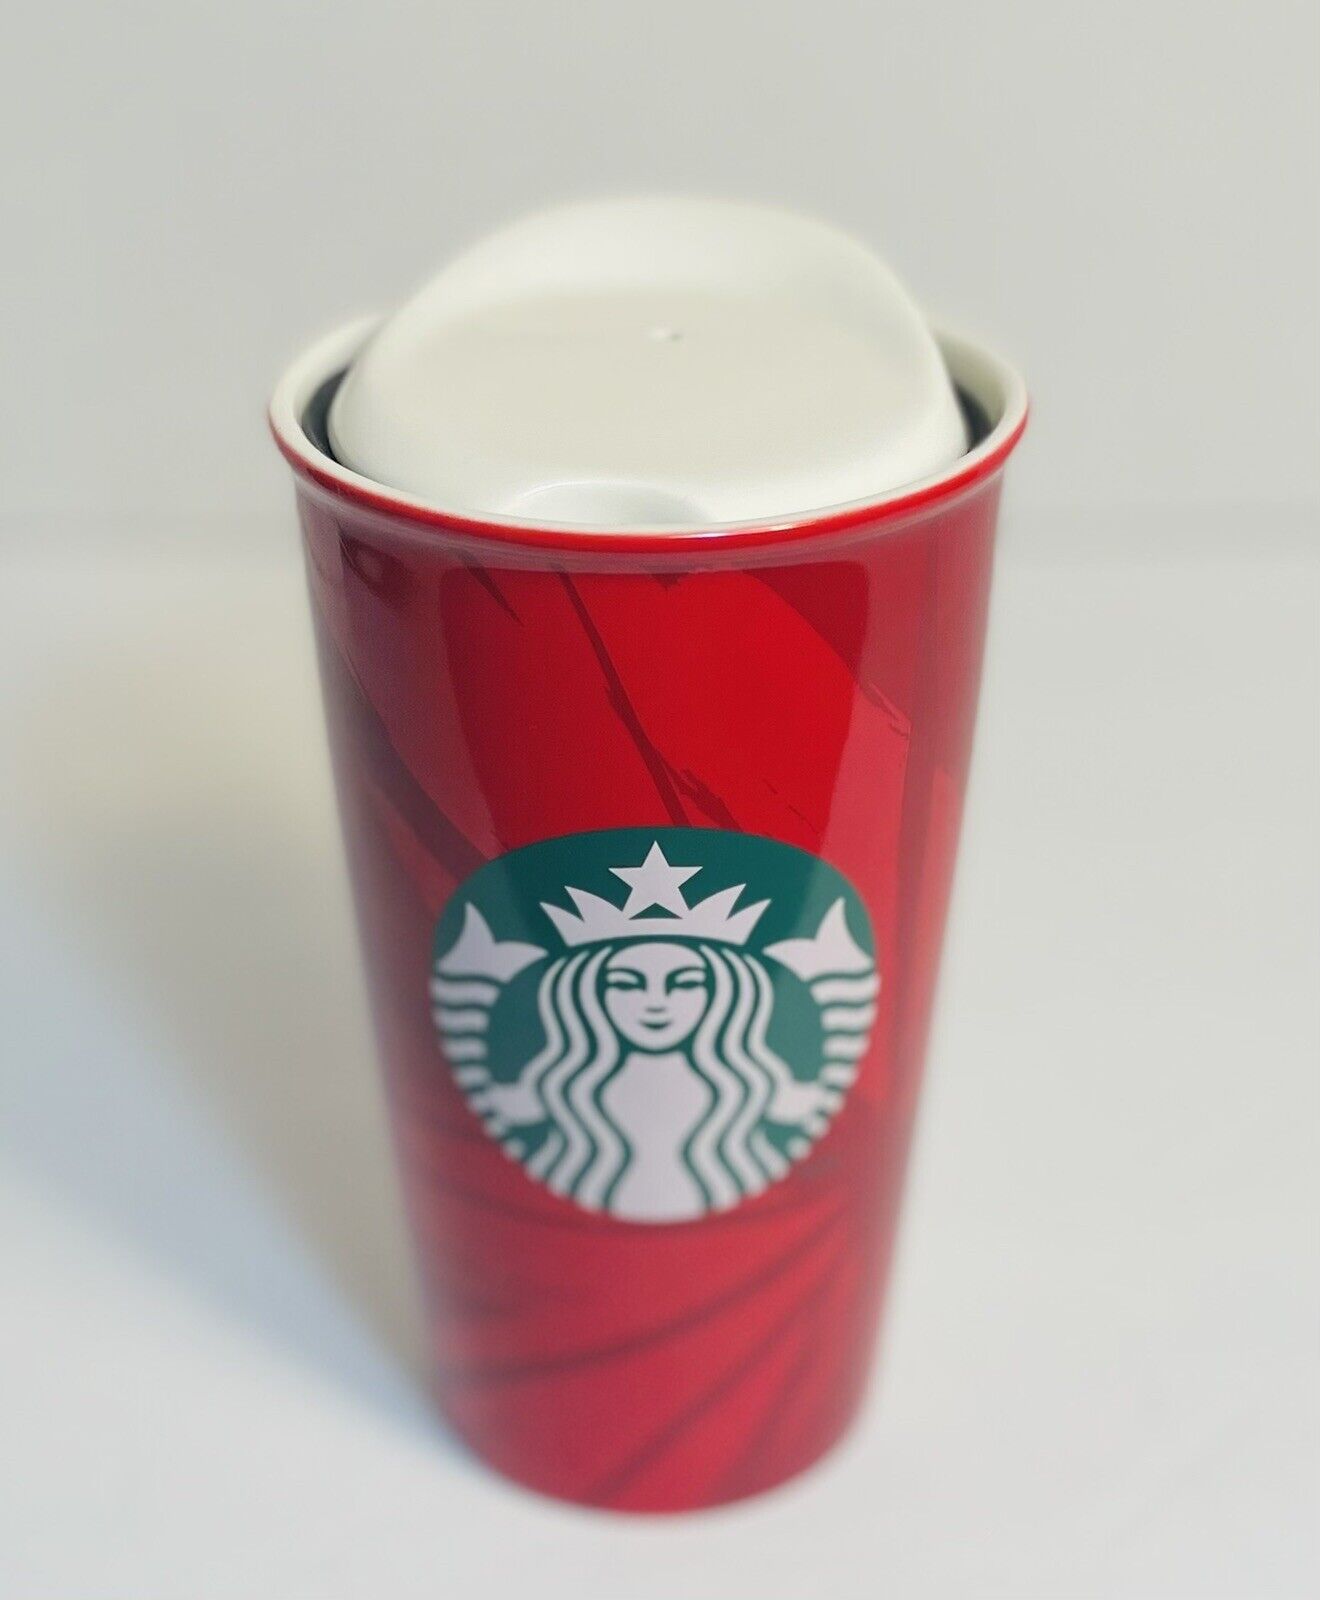 2014 Starbucks Coffee Cup Mug Red 12 oz Ceramic Tumbler Lid Mermaid Logo